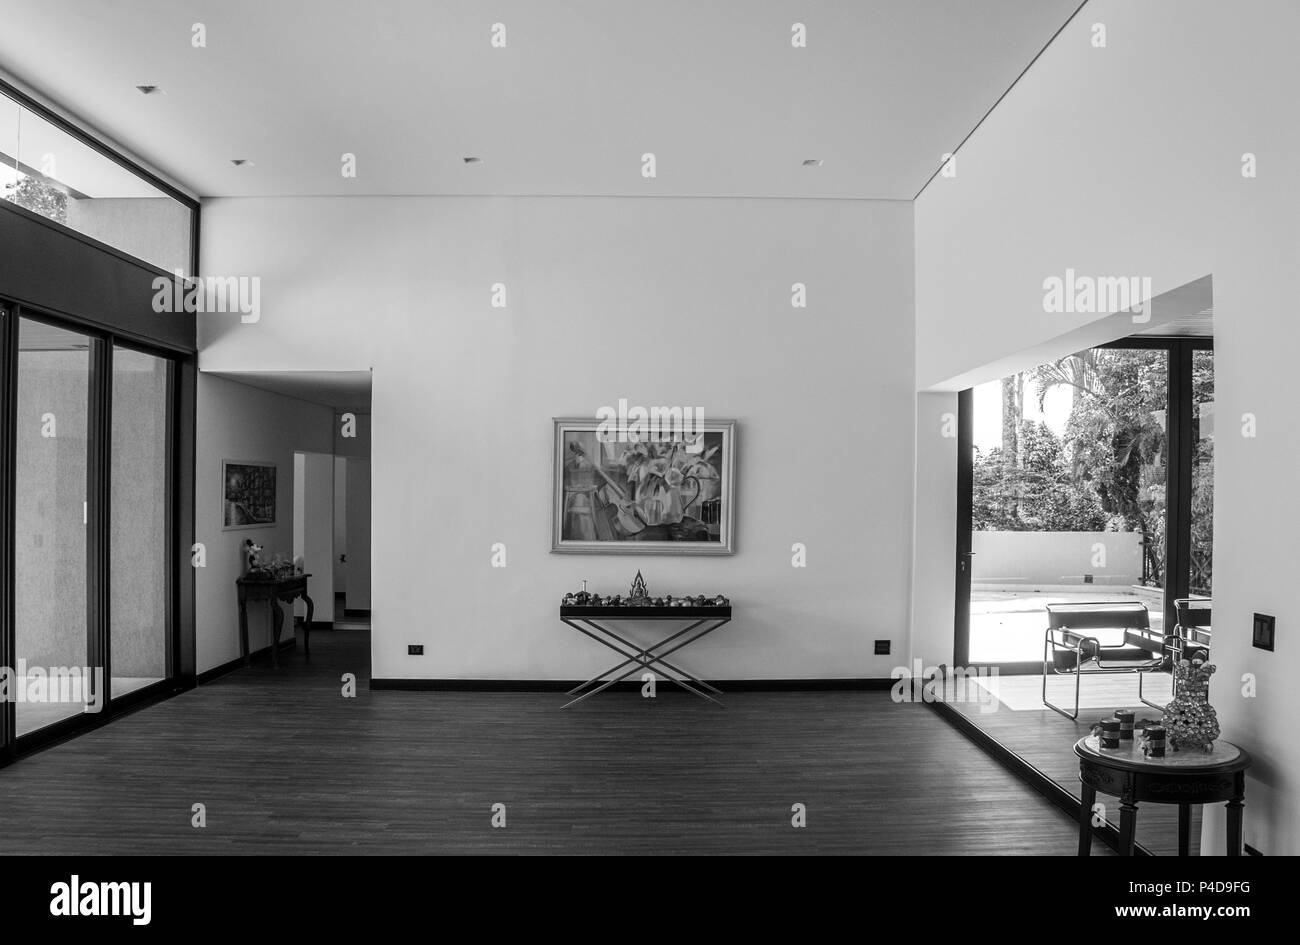 living room interior wooden floor modern elegant architecture black white Stock Photo